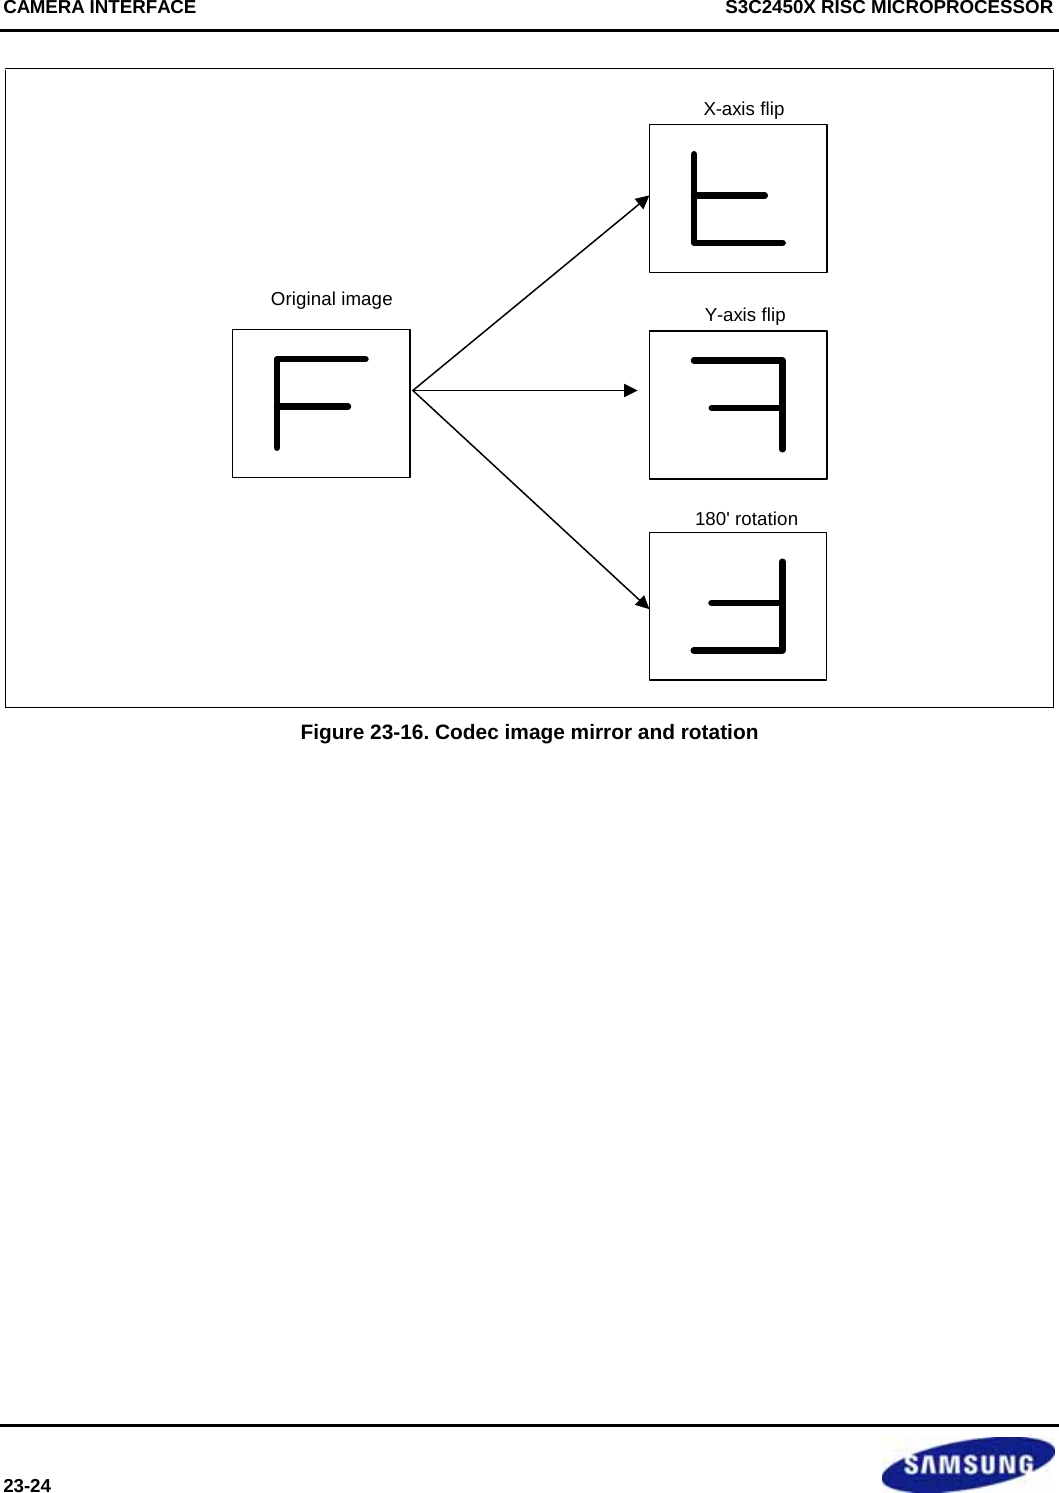 CAMERA INTERFACE  S3C2450X RISC MICROPROCESSOR 23-24                      Original imageX-axis flipY-axis flip180&apos; rotation Figure 23-16. Codec image mirror and rotation  